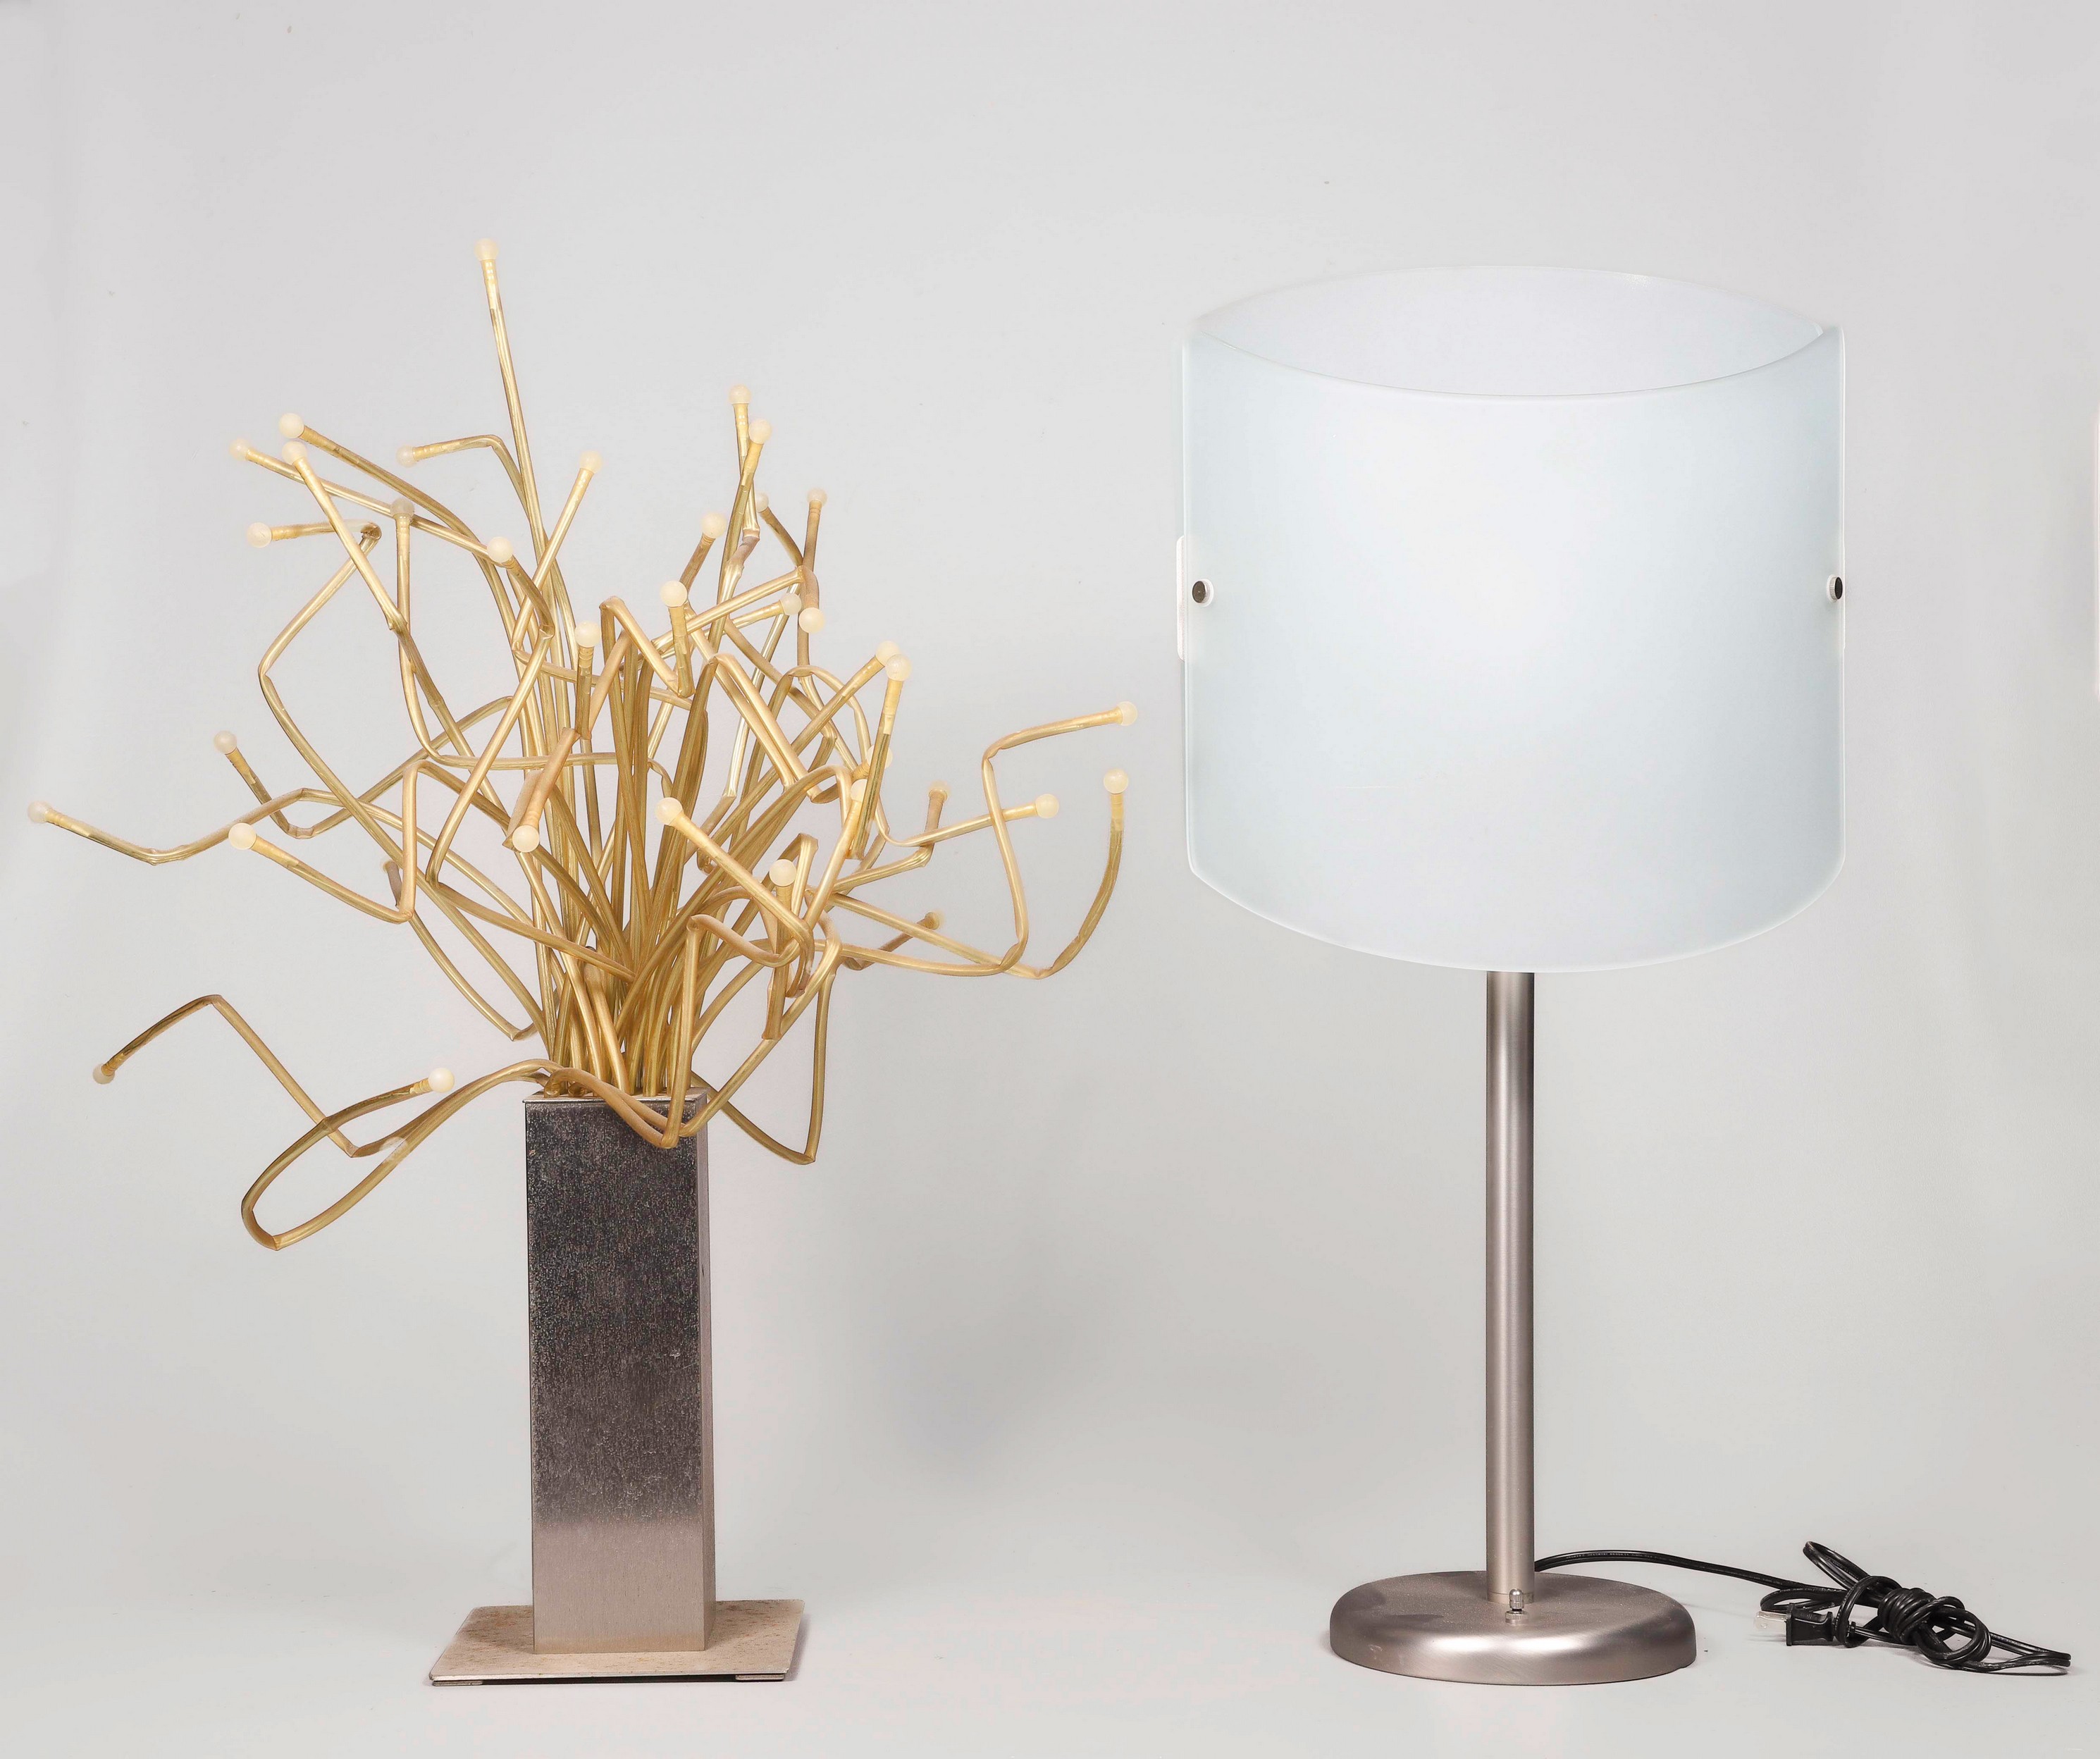 (2) Modern table lamps, c/o Ikea